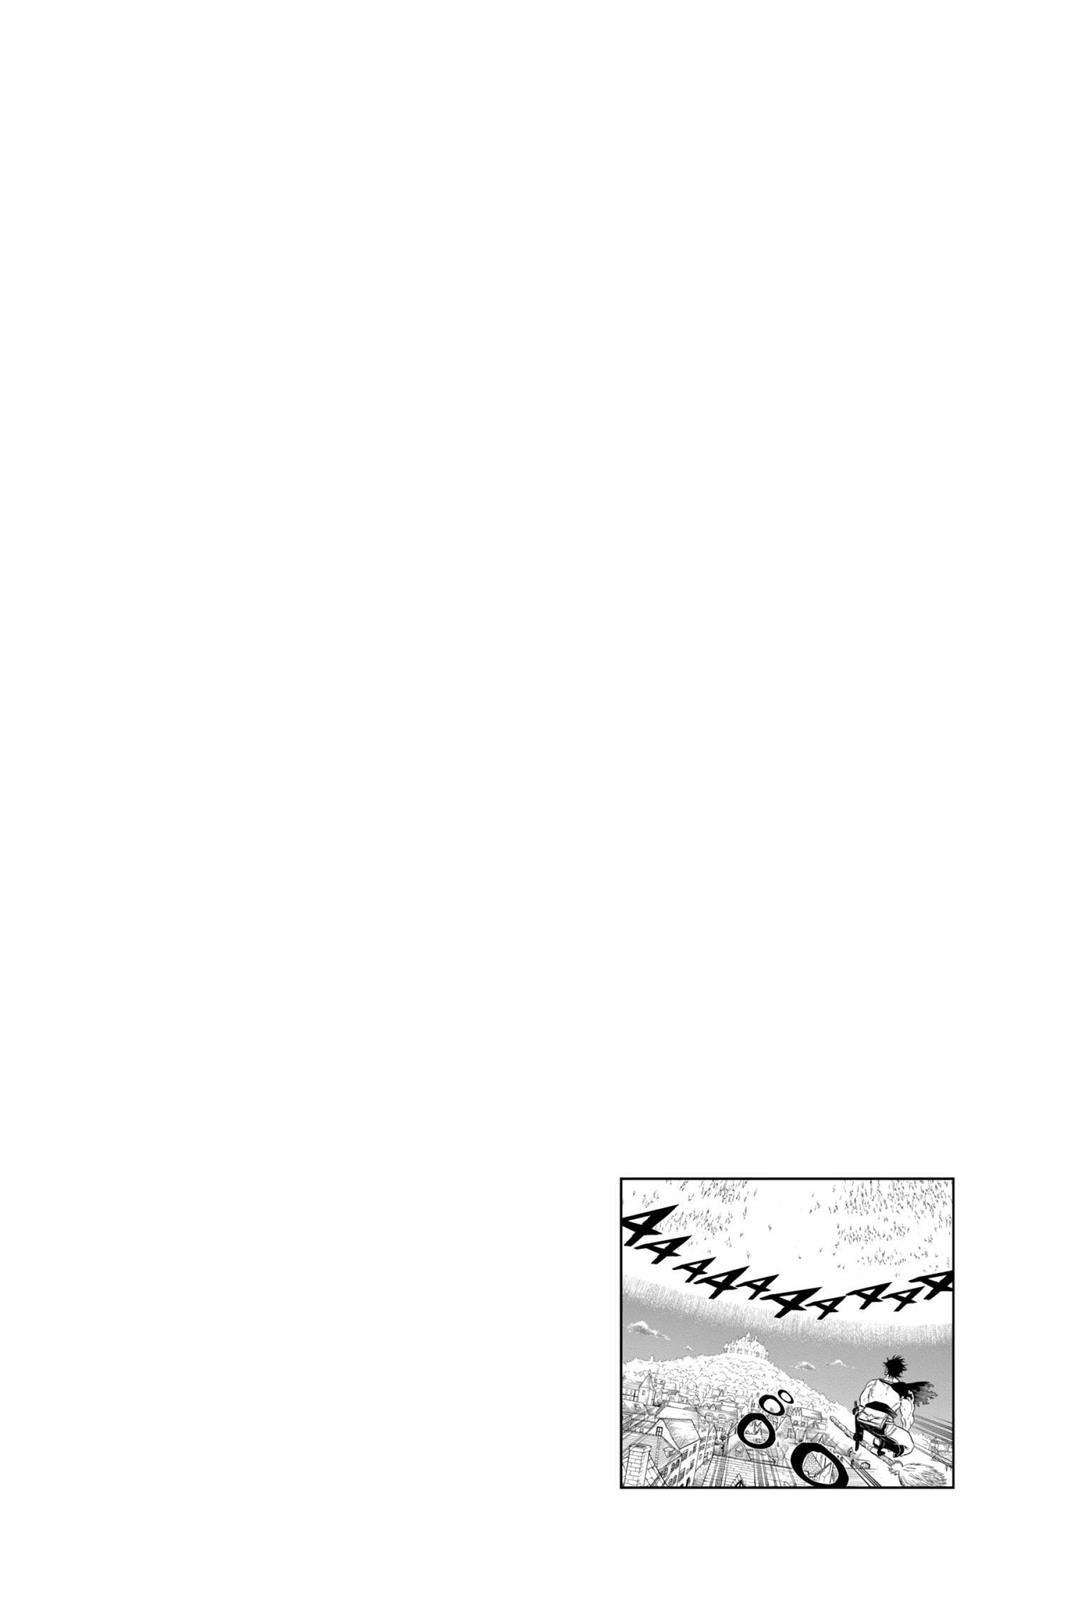 Black Clover,  Page 146 image 03